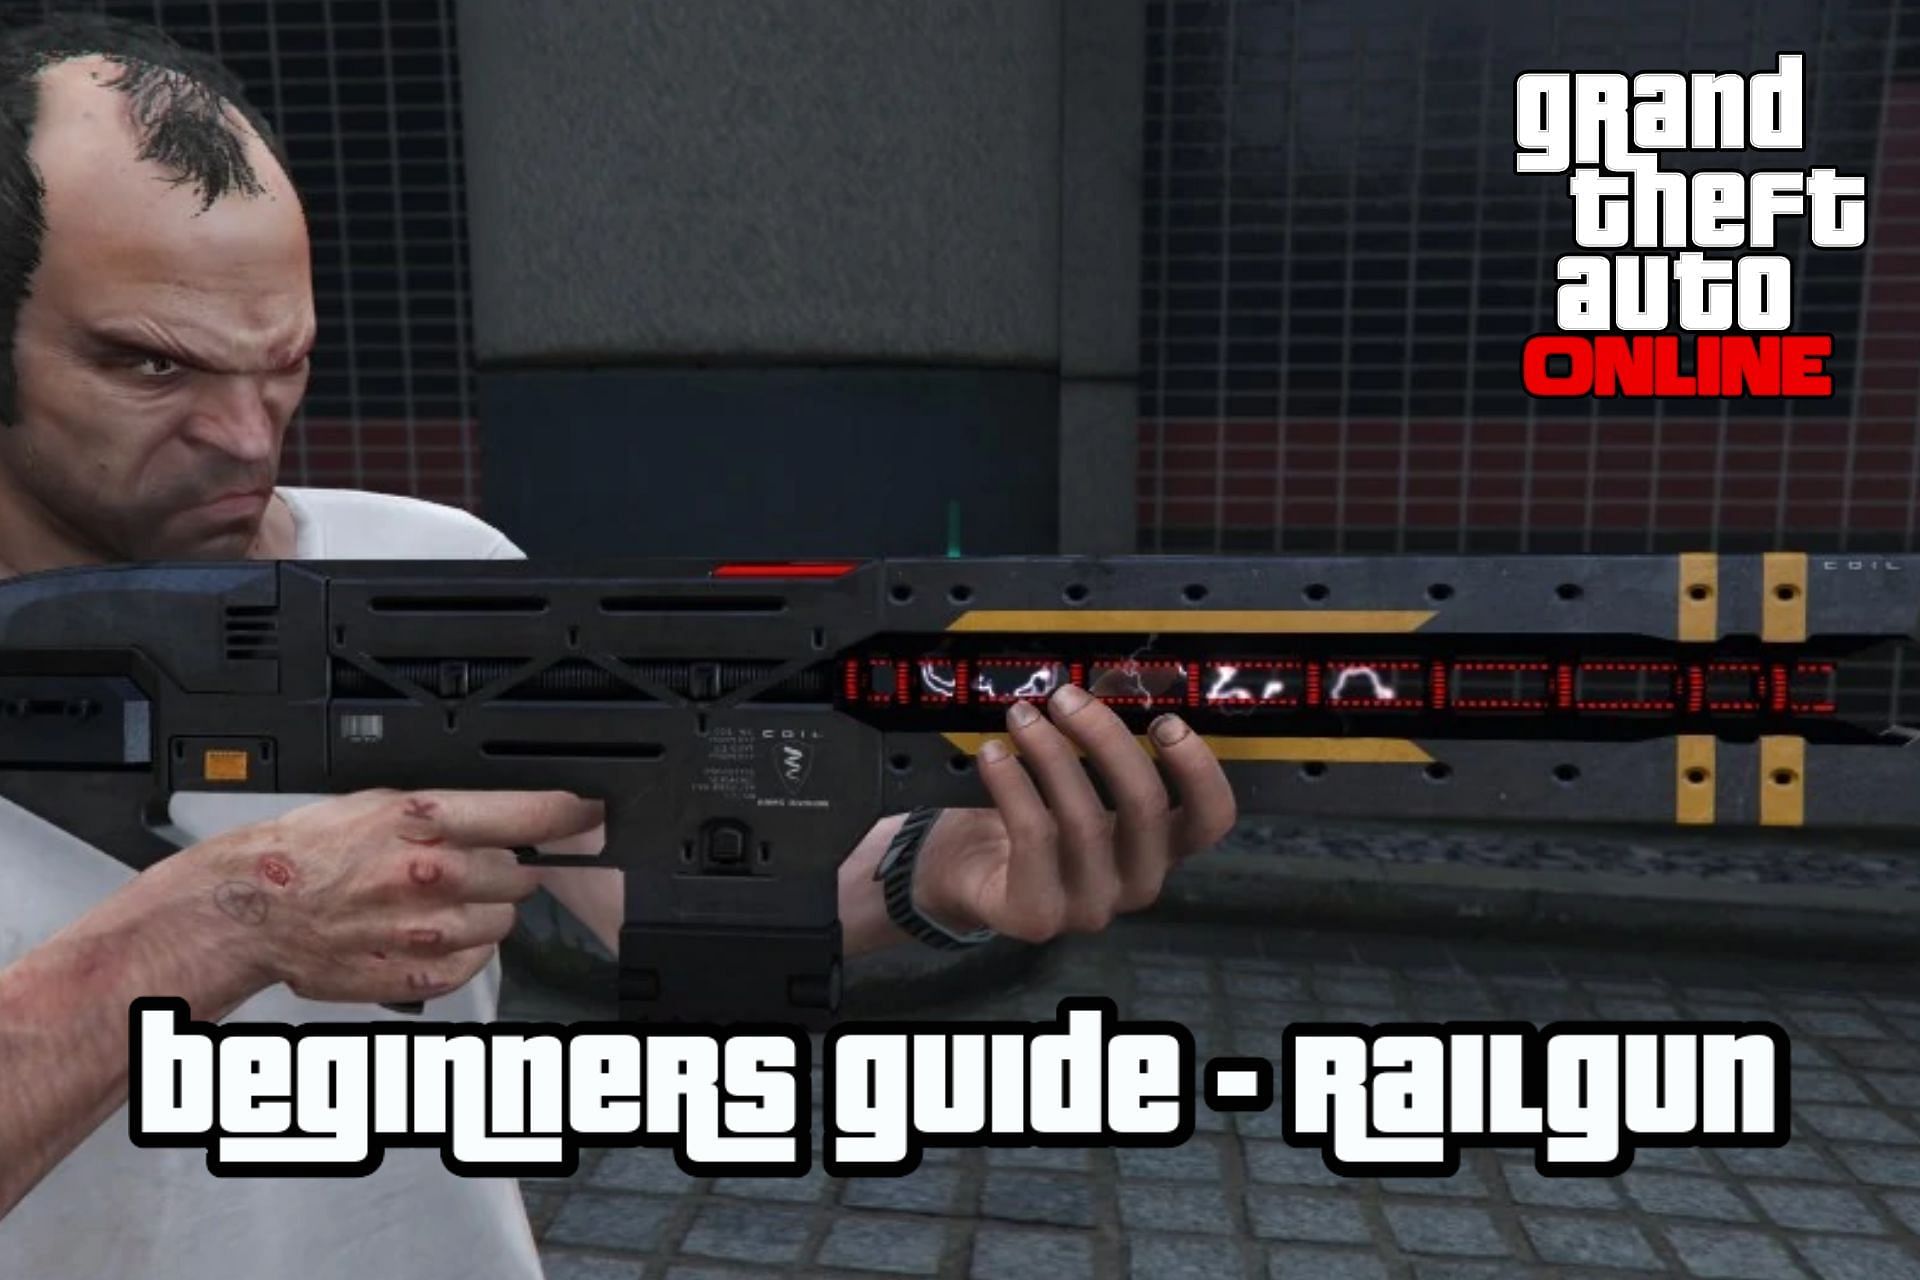 The Railgun is a futuristic weapon in GTA Online (Image via Rockstar Games)